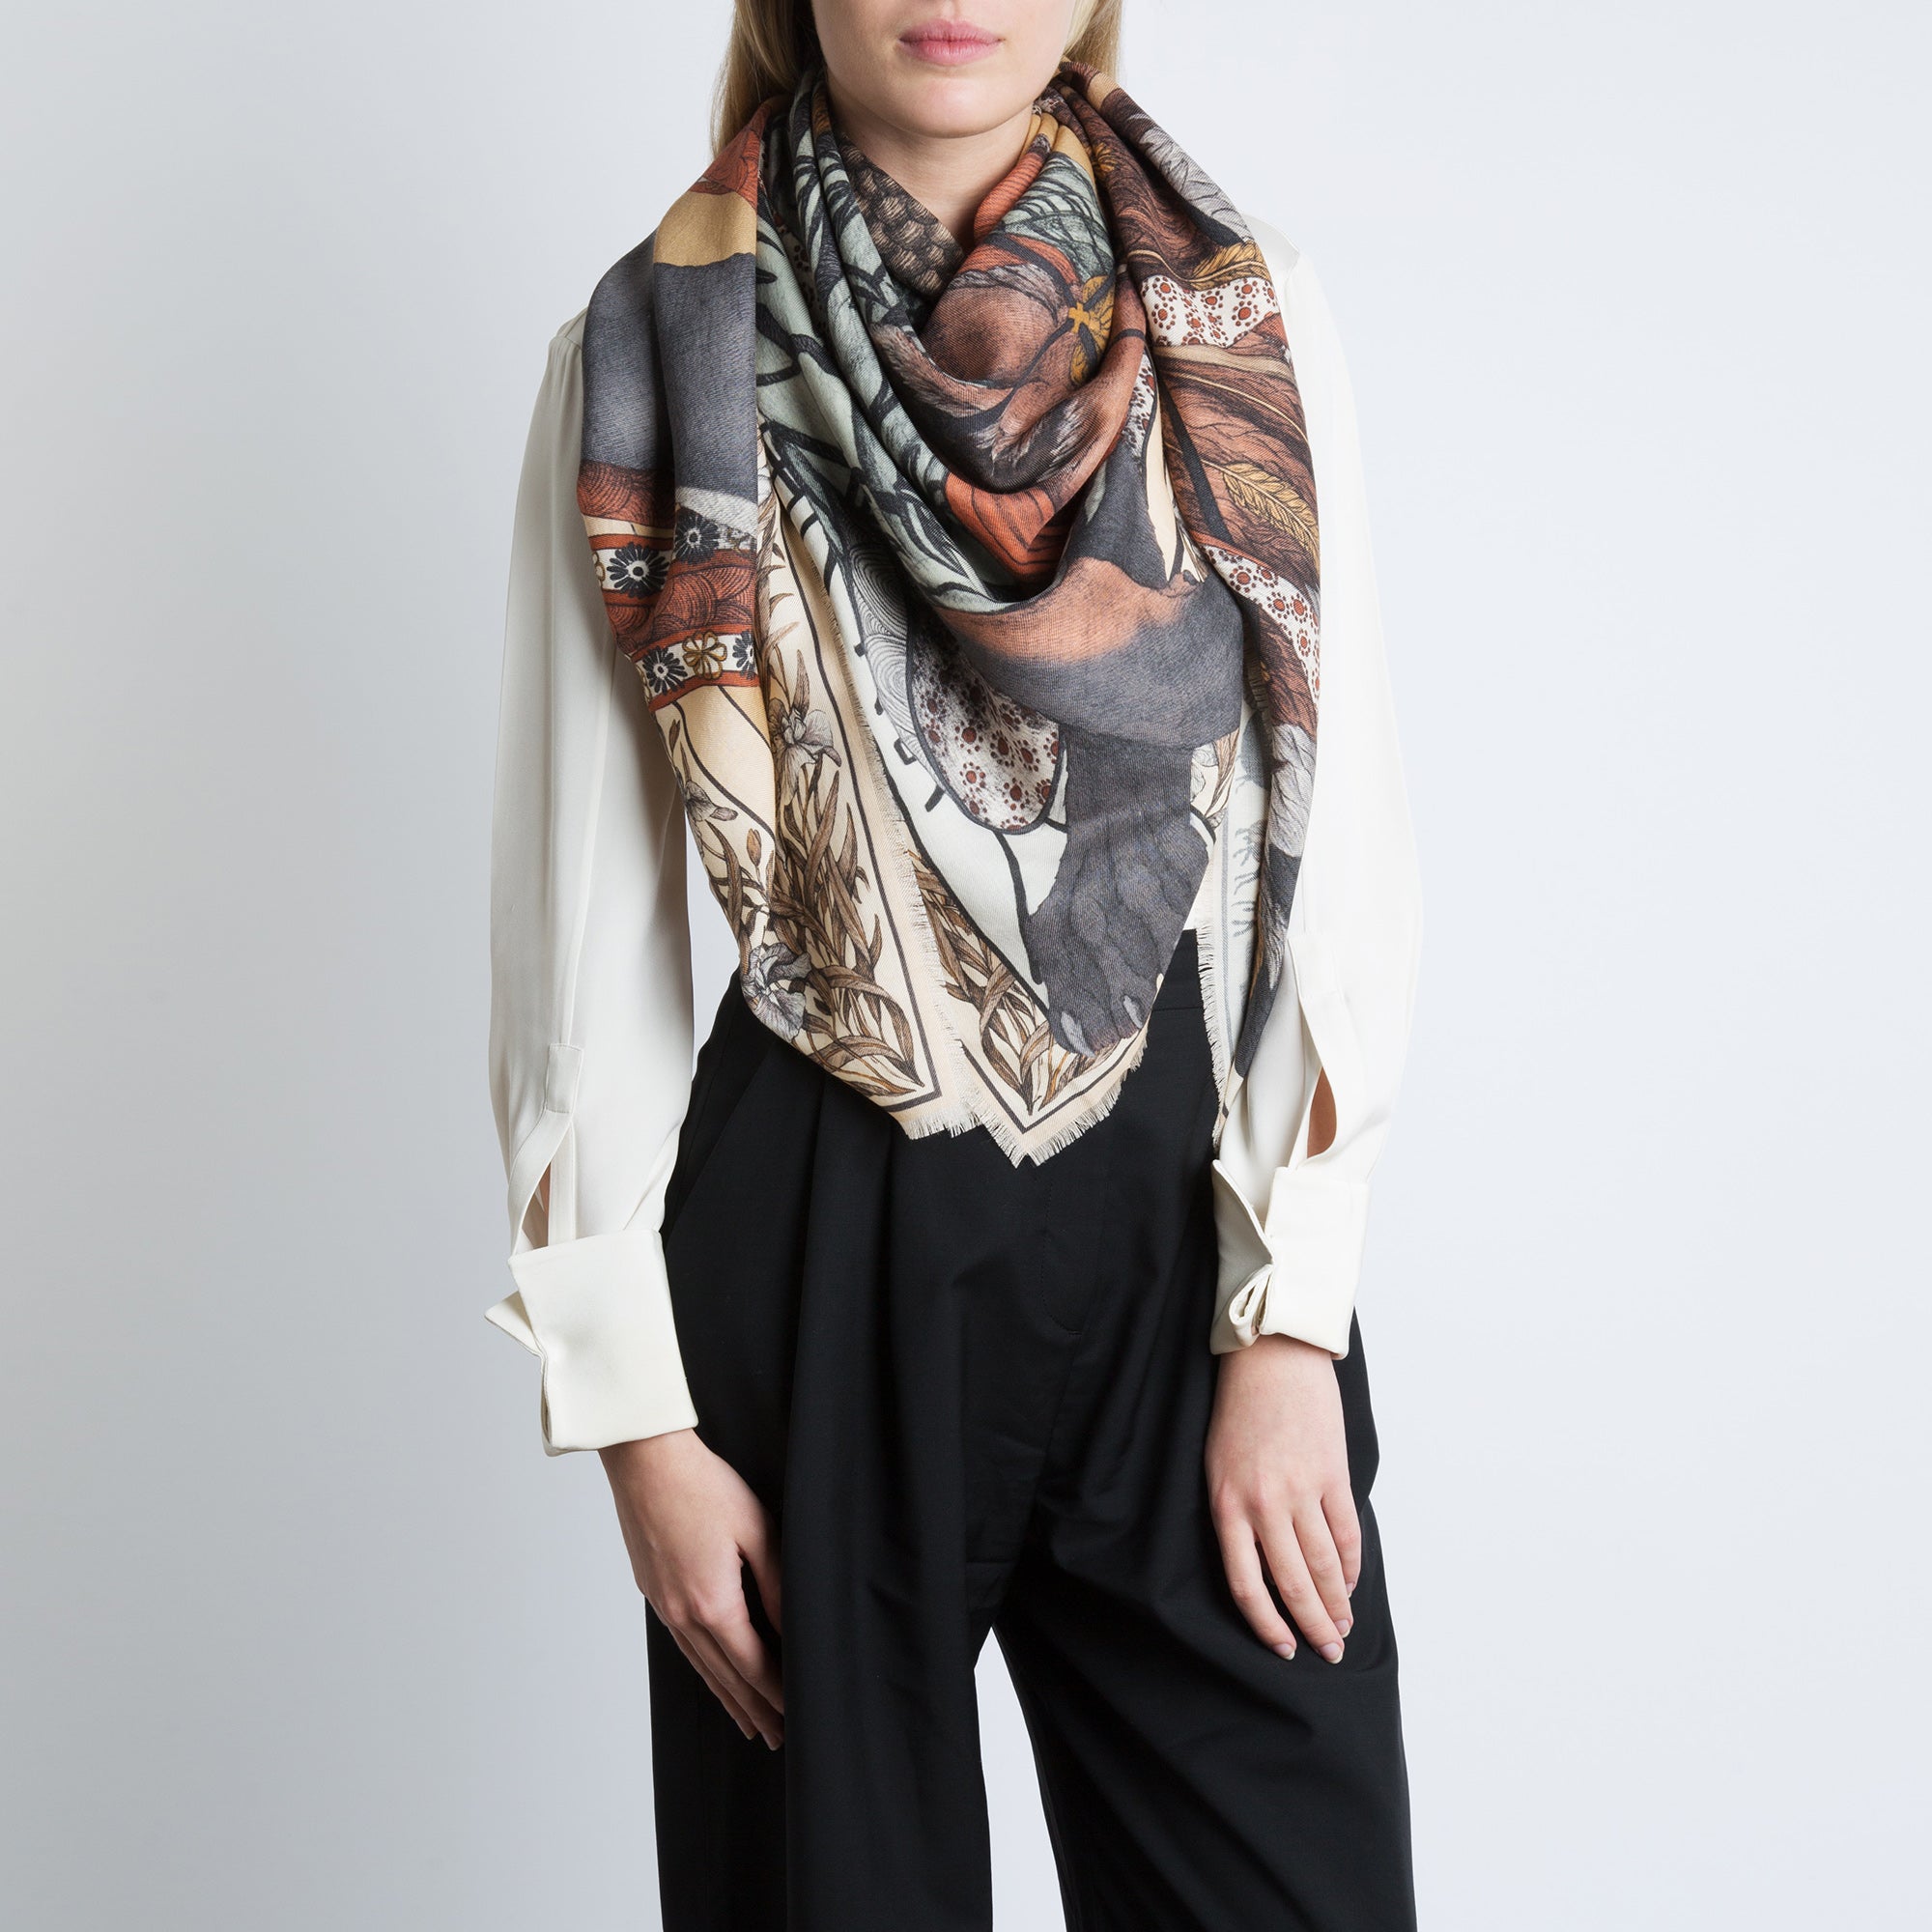 Silk Scarves: My Fashion Secret Weapon - The Brunette Nomad